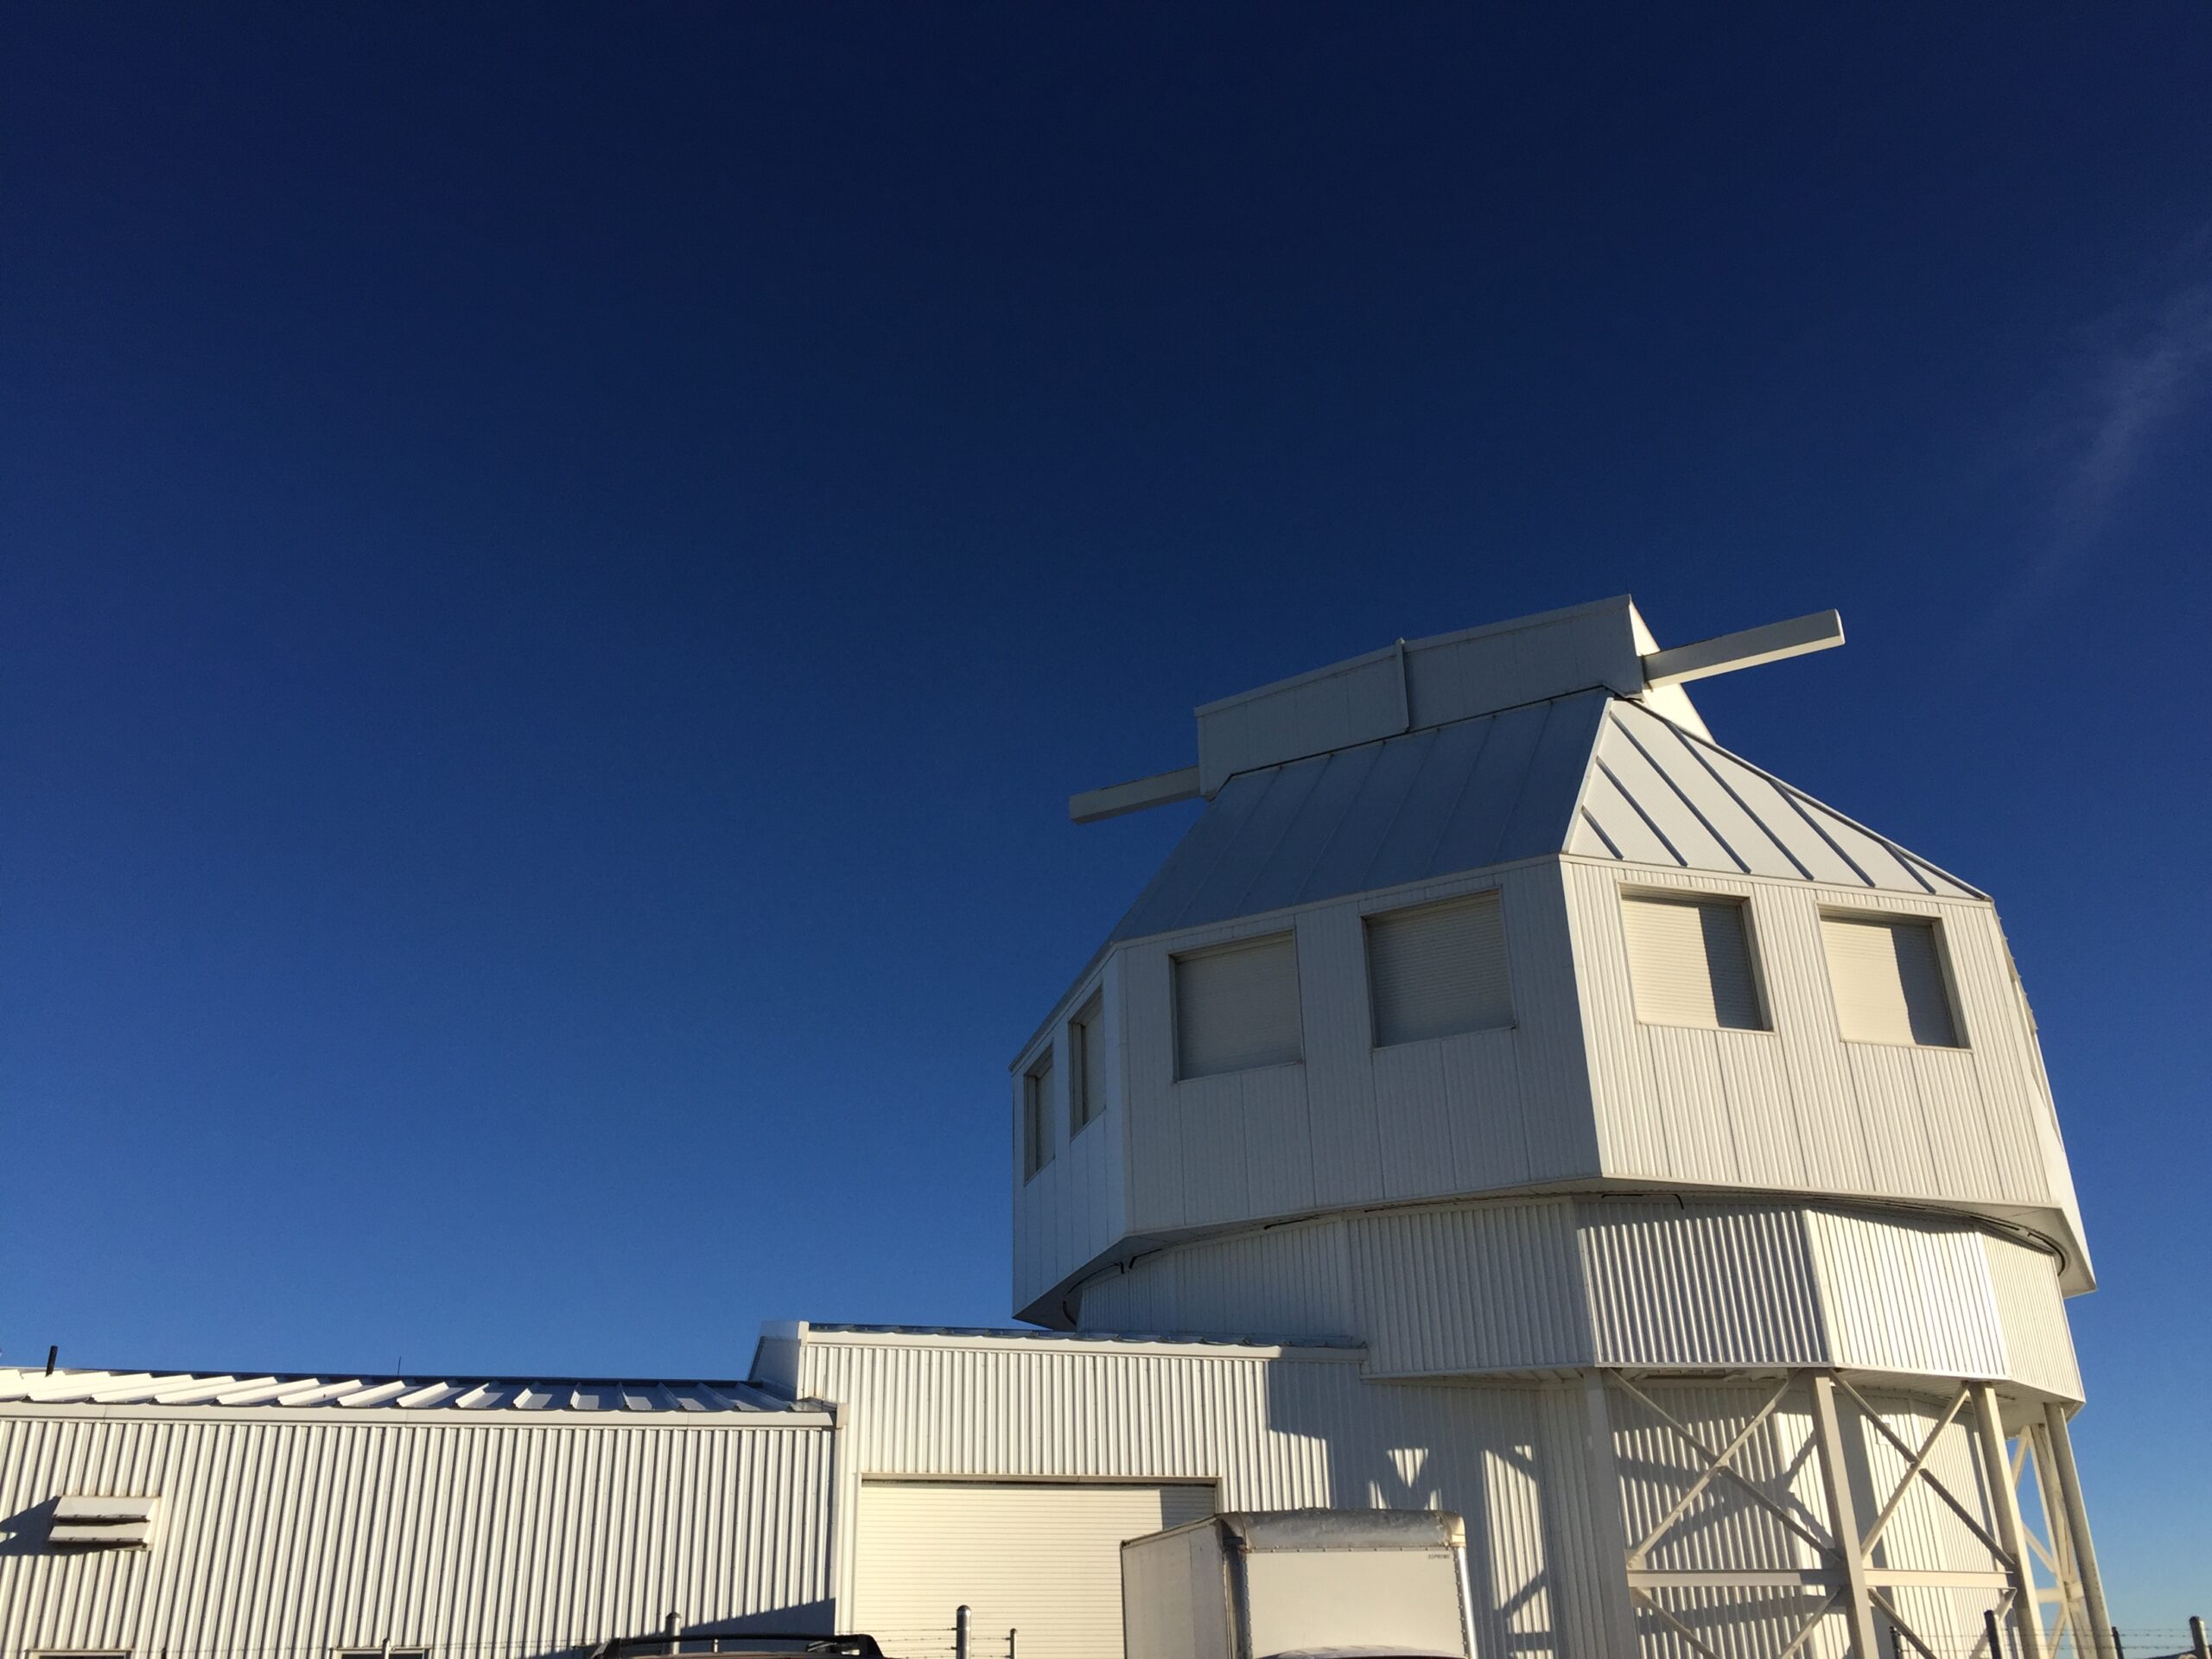 The Space Surveillance Telescope Complex